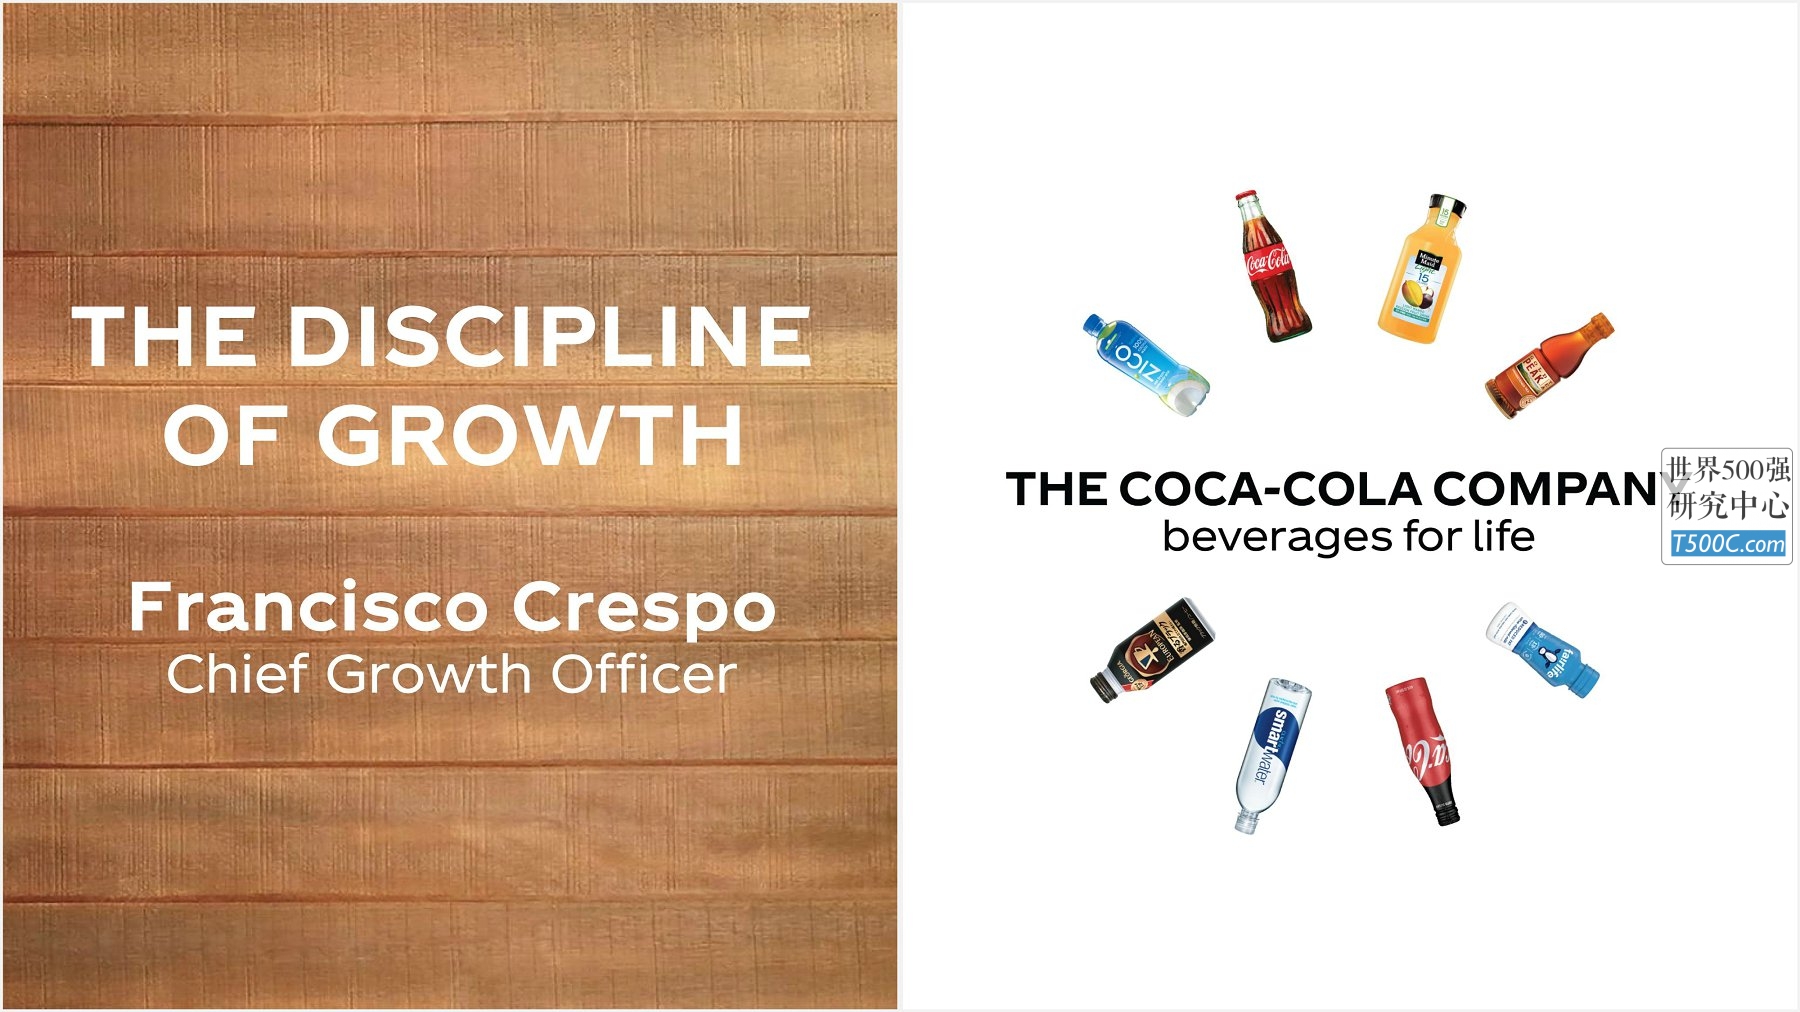 可口可乐CocaCola_PPT样式_2016_T500C.com_CGO Francisco-Crespo.pdf